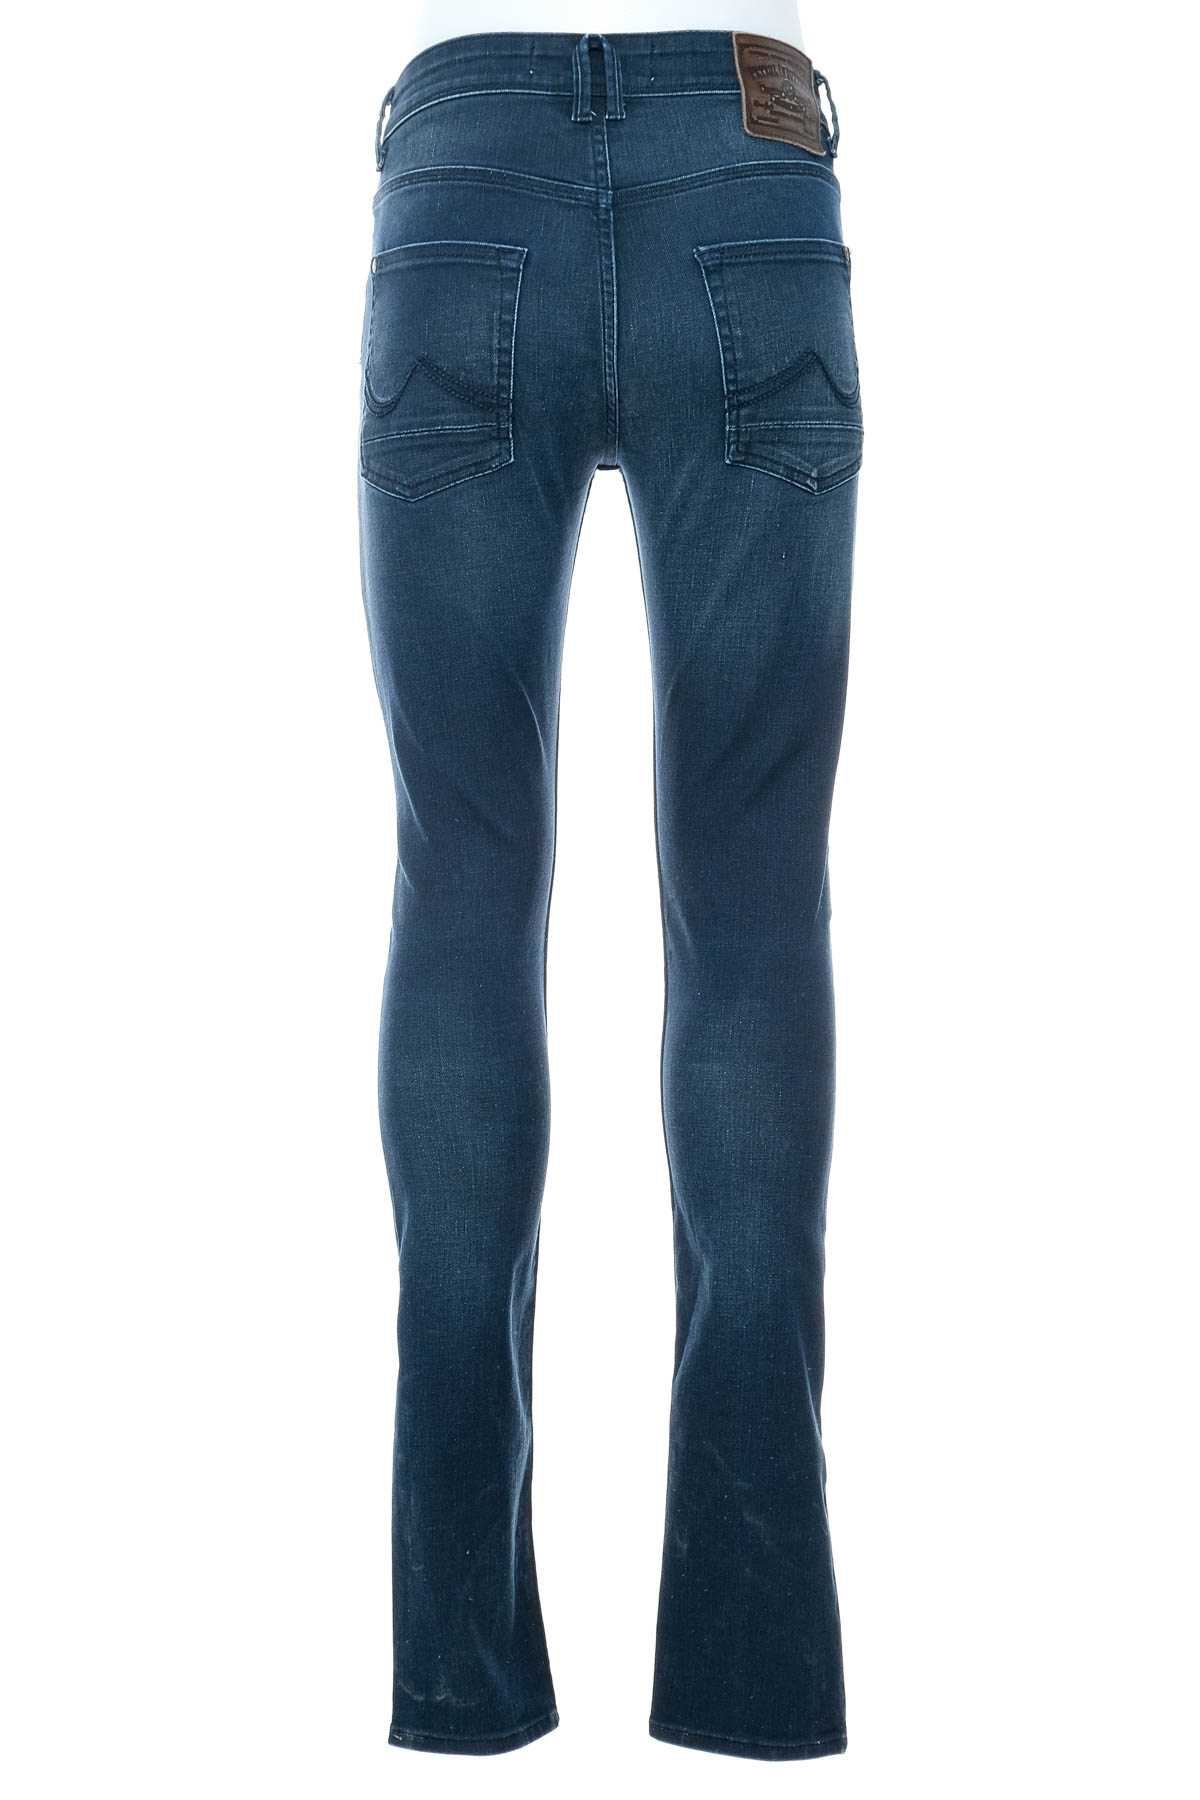 Men's jeans - Petrol Industries Co - 1